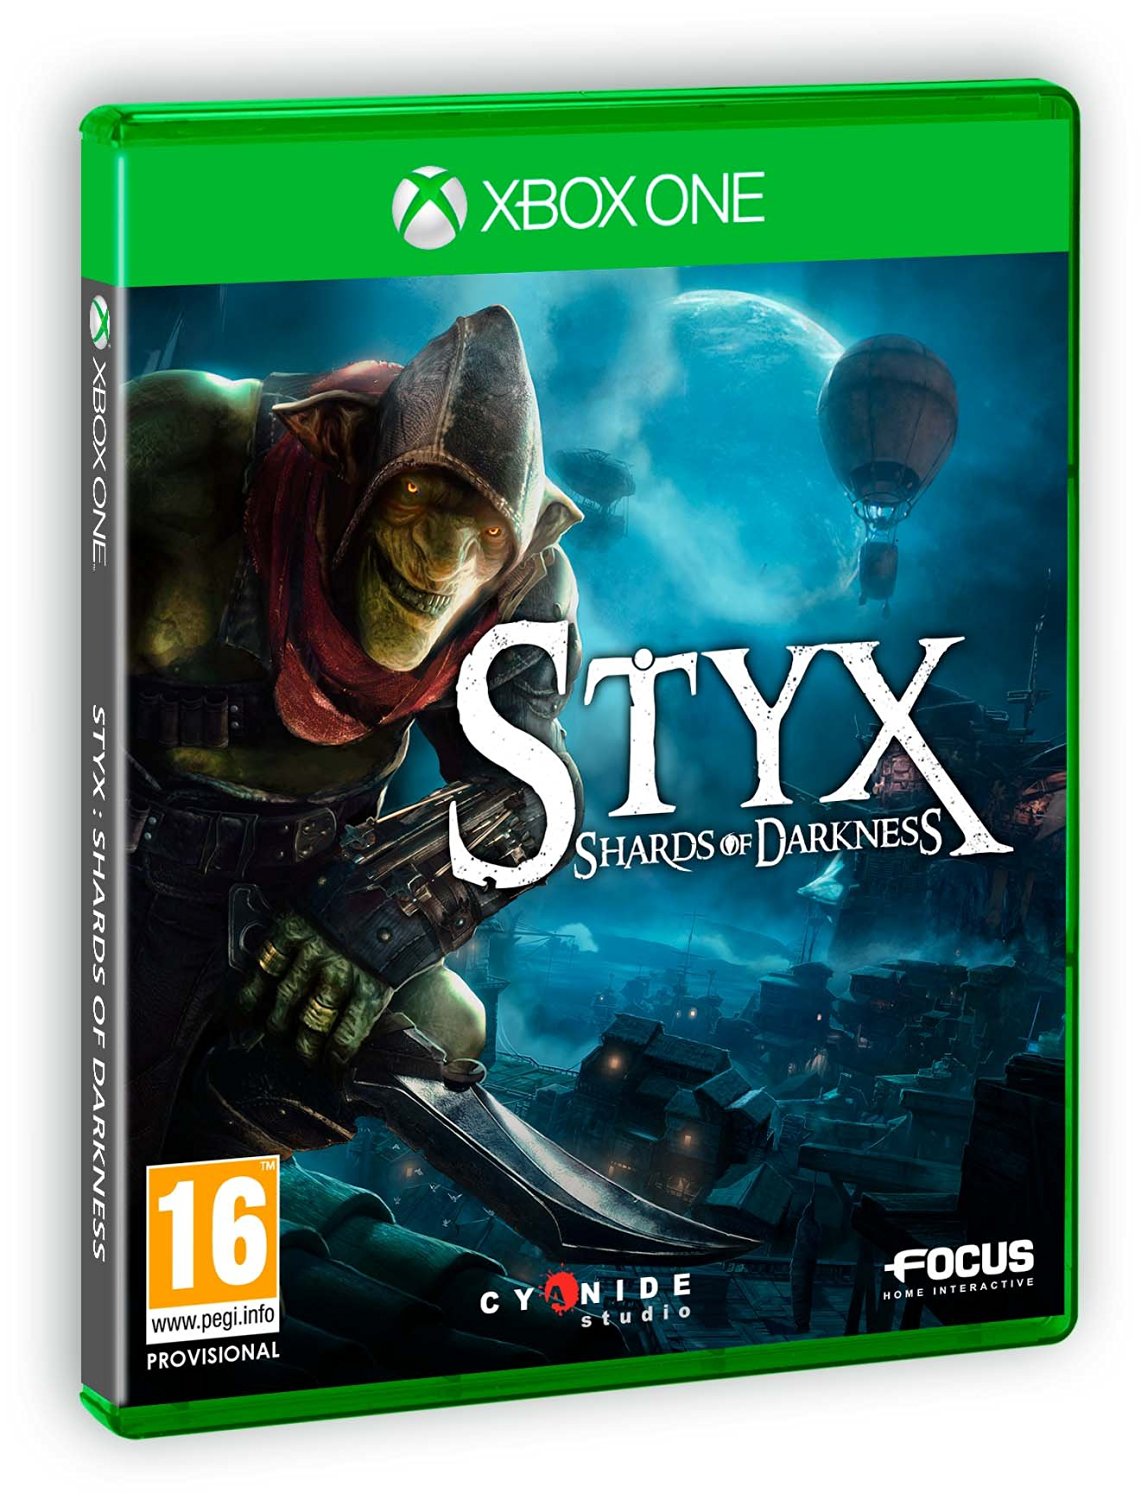 styx shards of darkness 2 download